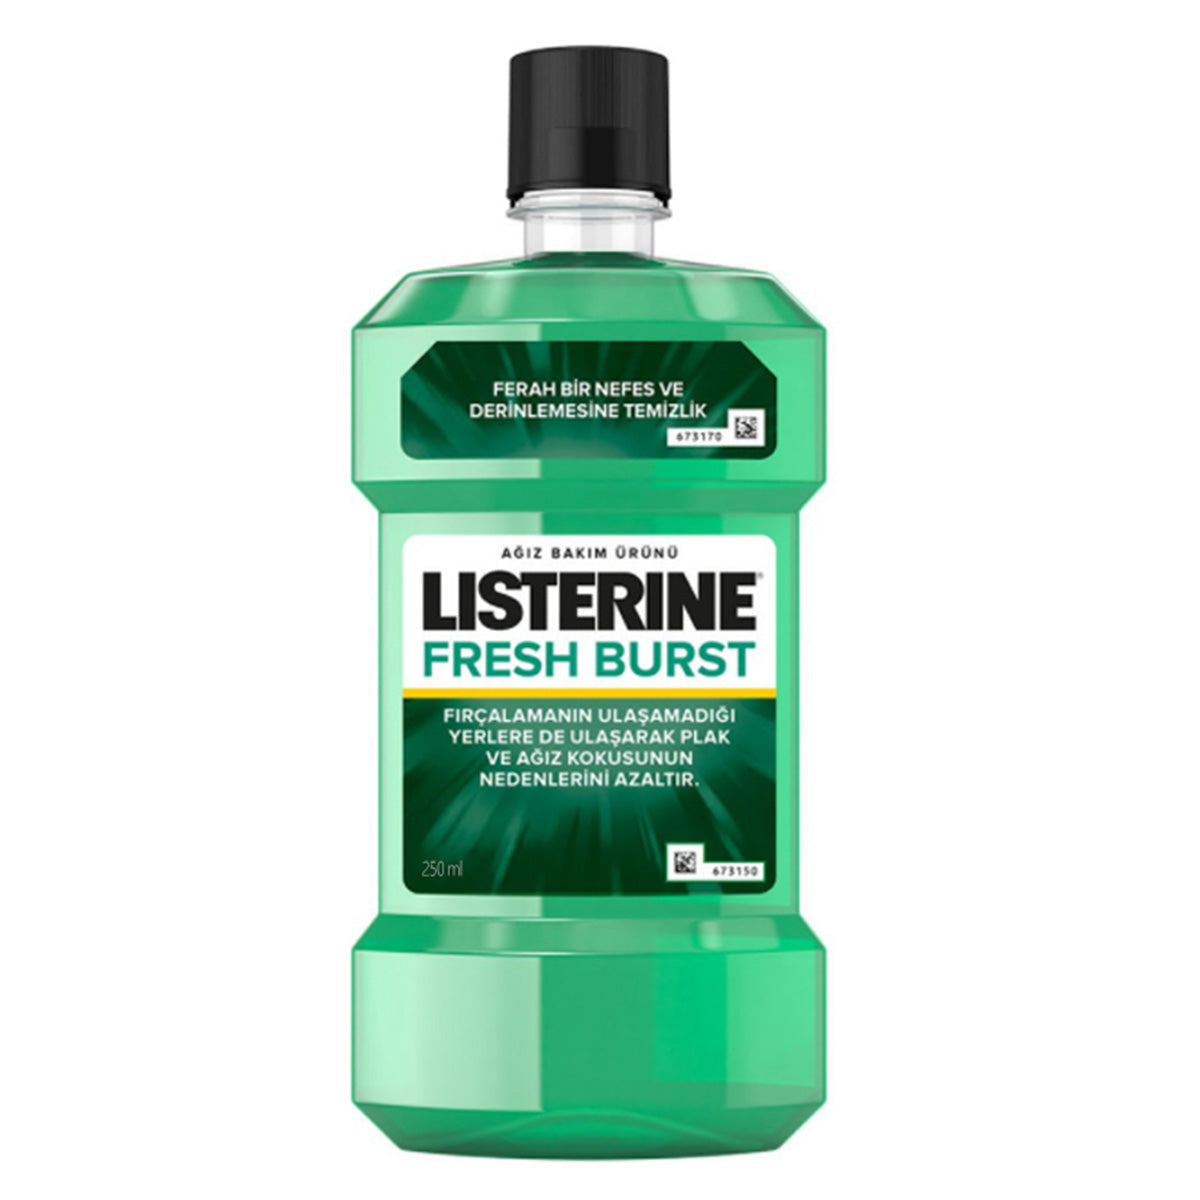 A bottle of Listerine Fresh Burst Mouthwash - 250ml on a white background.